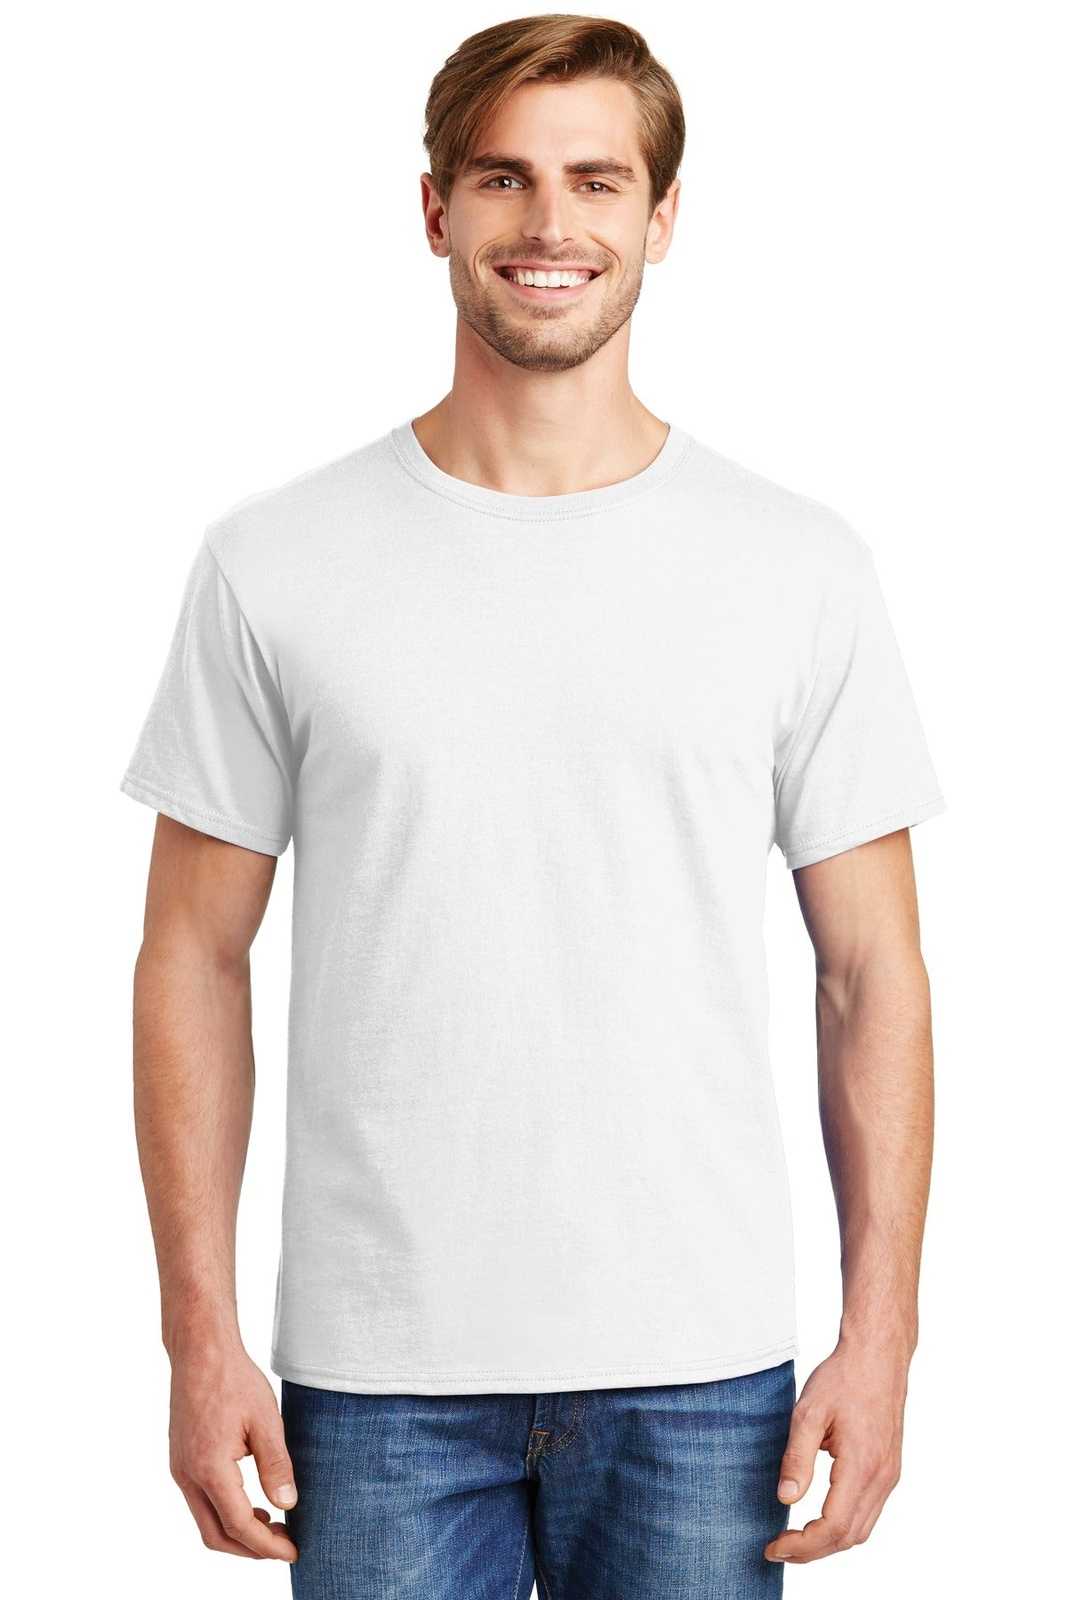 Hanes 5280 Comfortsoft 100% Cotton T-Shirt - White - HIT a Double